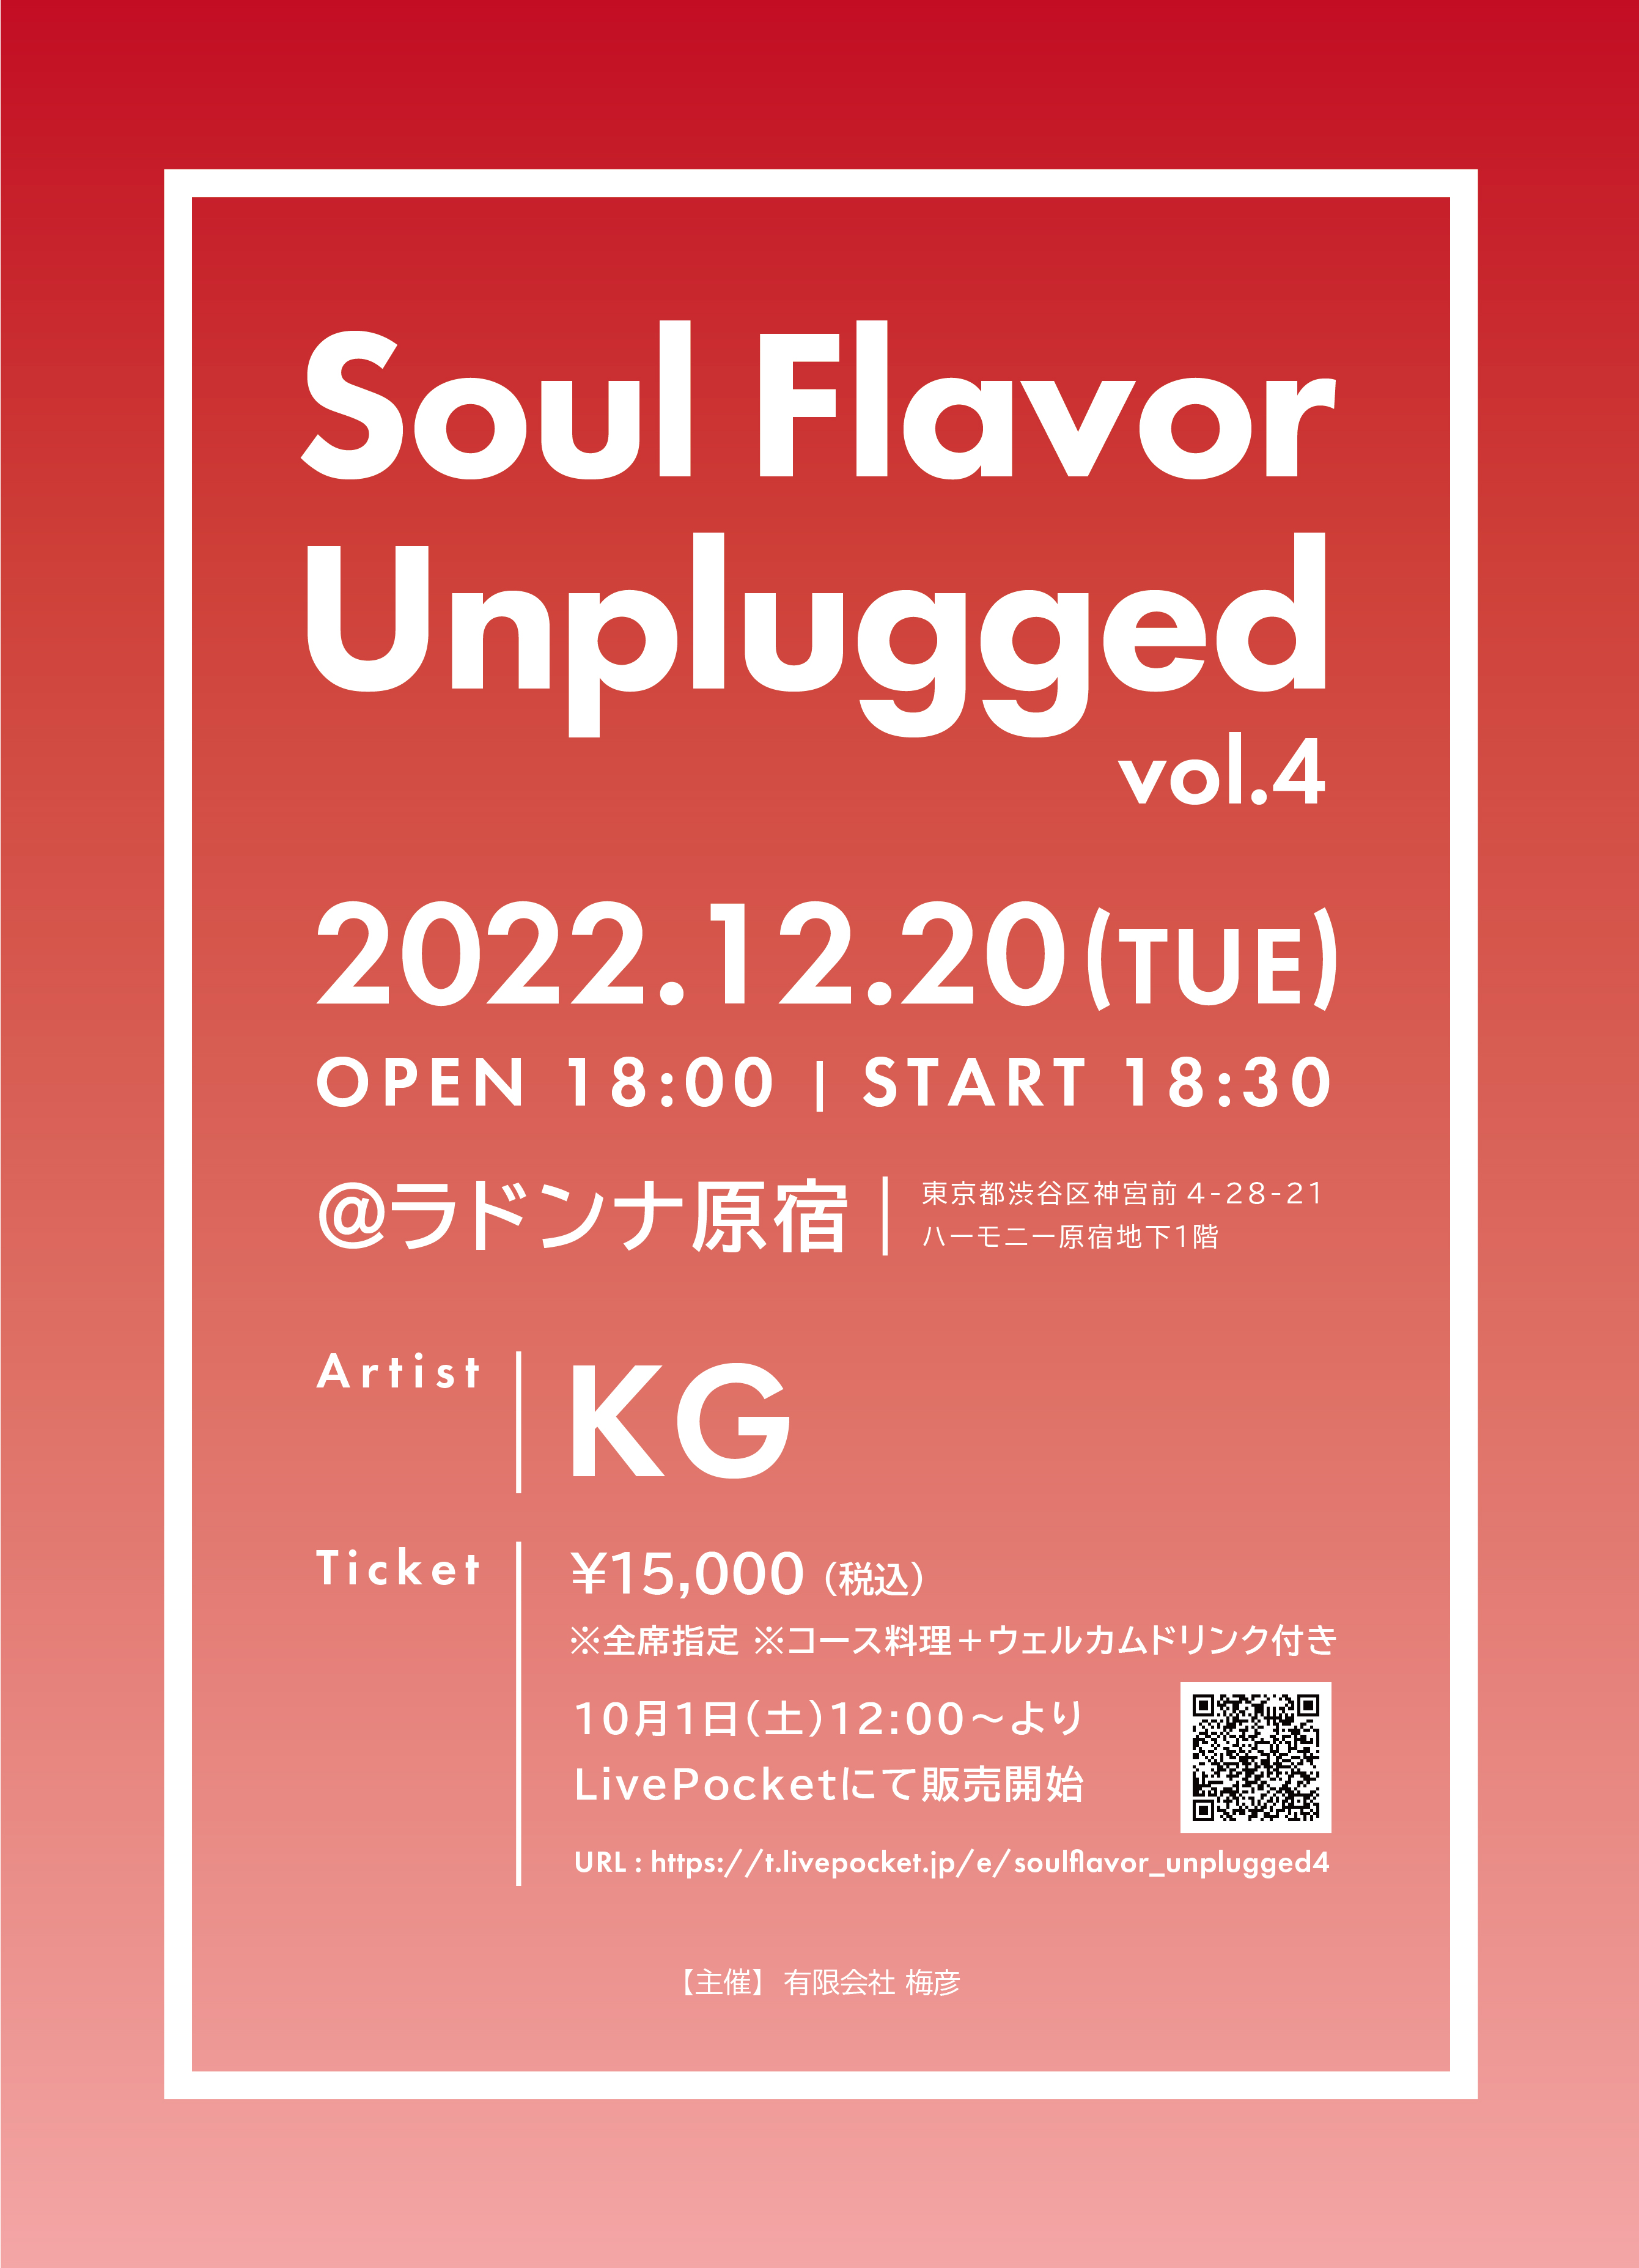 Soul Flavor Unplugged vol.4